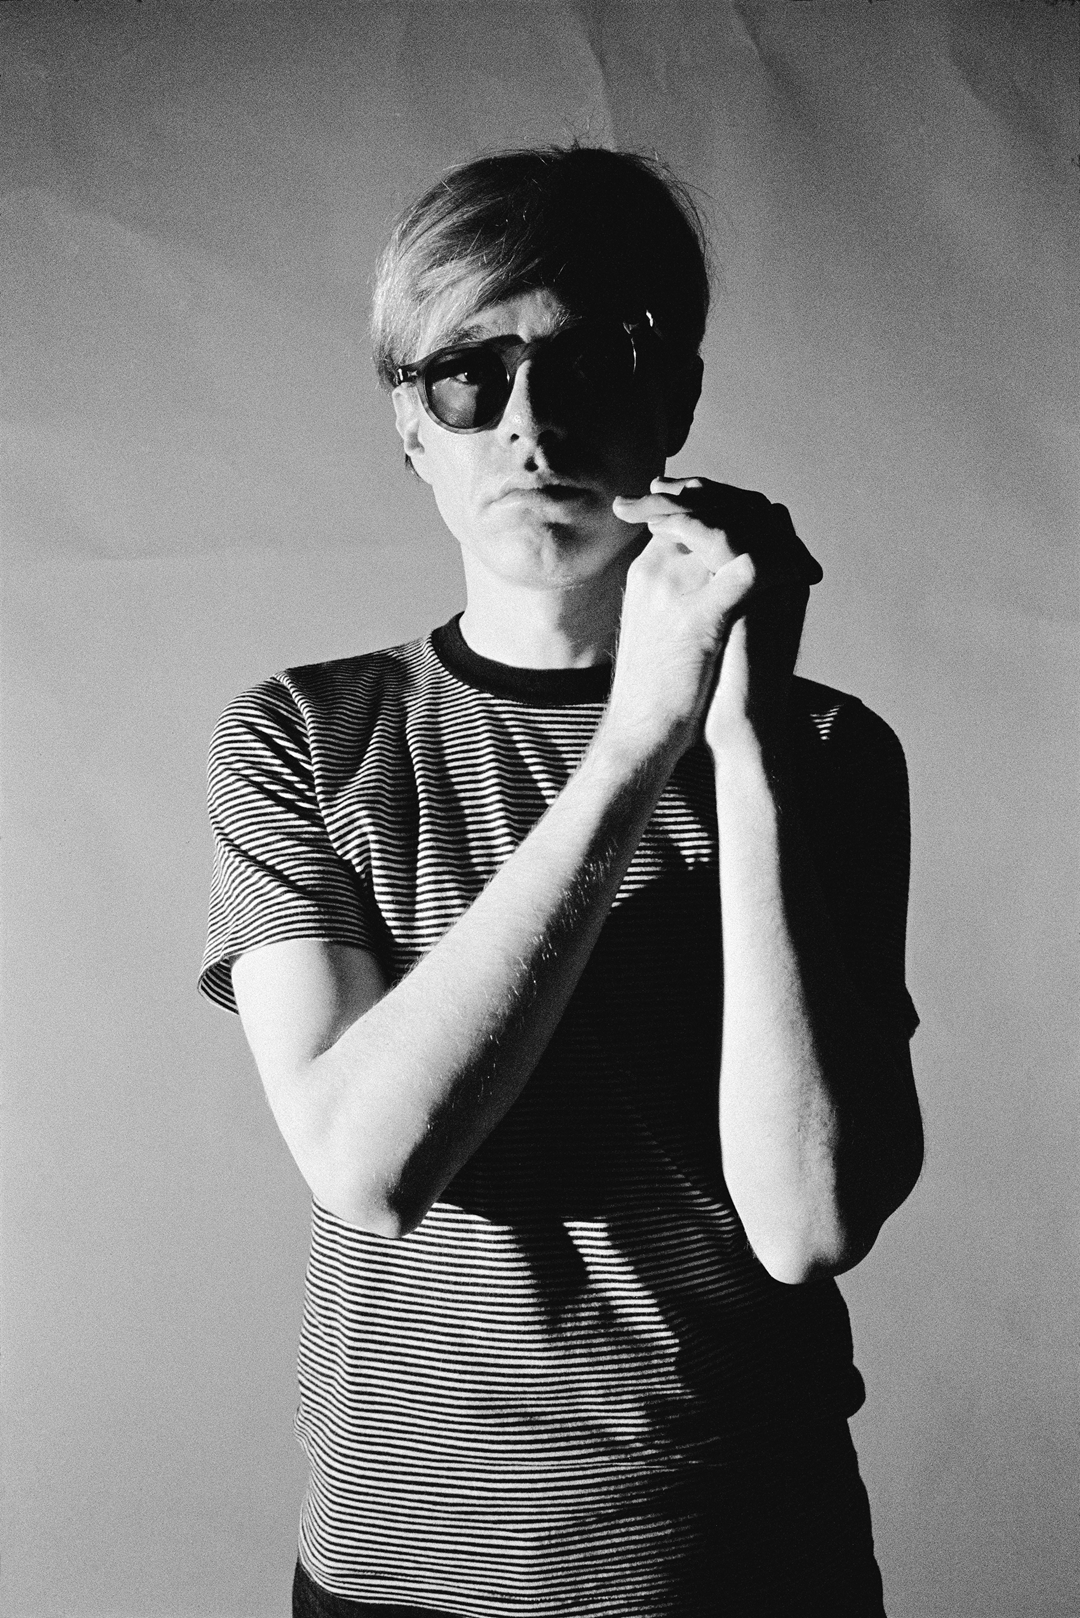 Stephen Shore: Andy Warhol, 1965-7. © Stephen Shore. As reproduced in Factory: Andy Warhol by Stephen Shore
